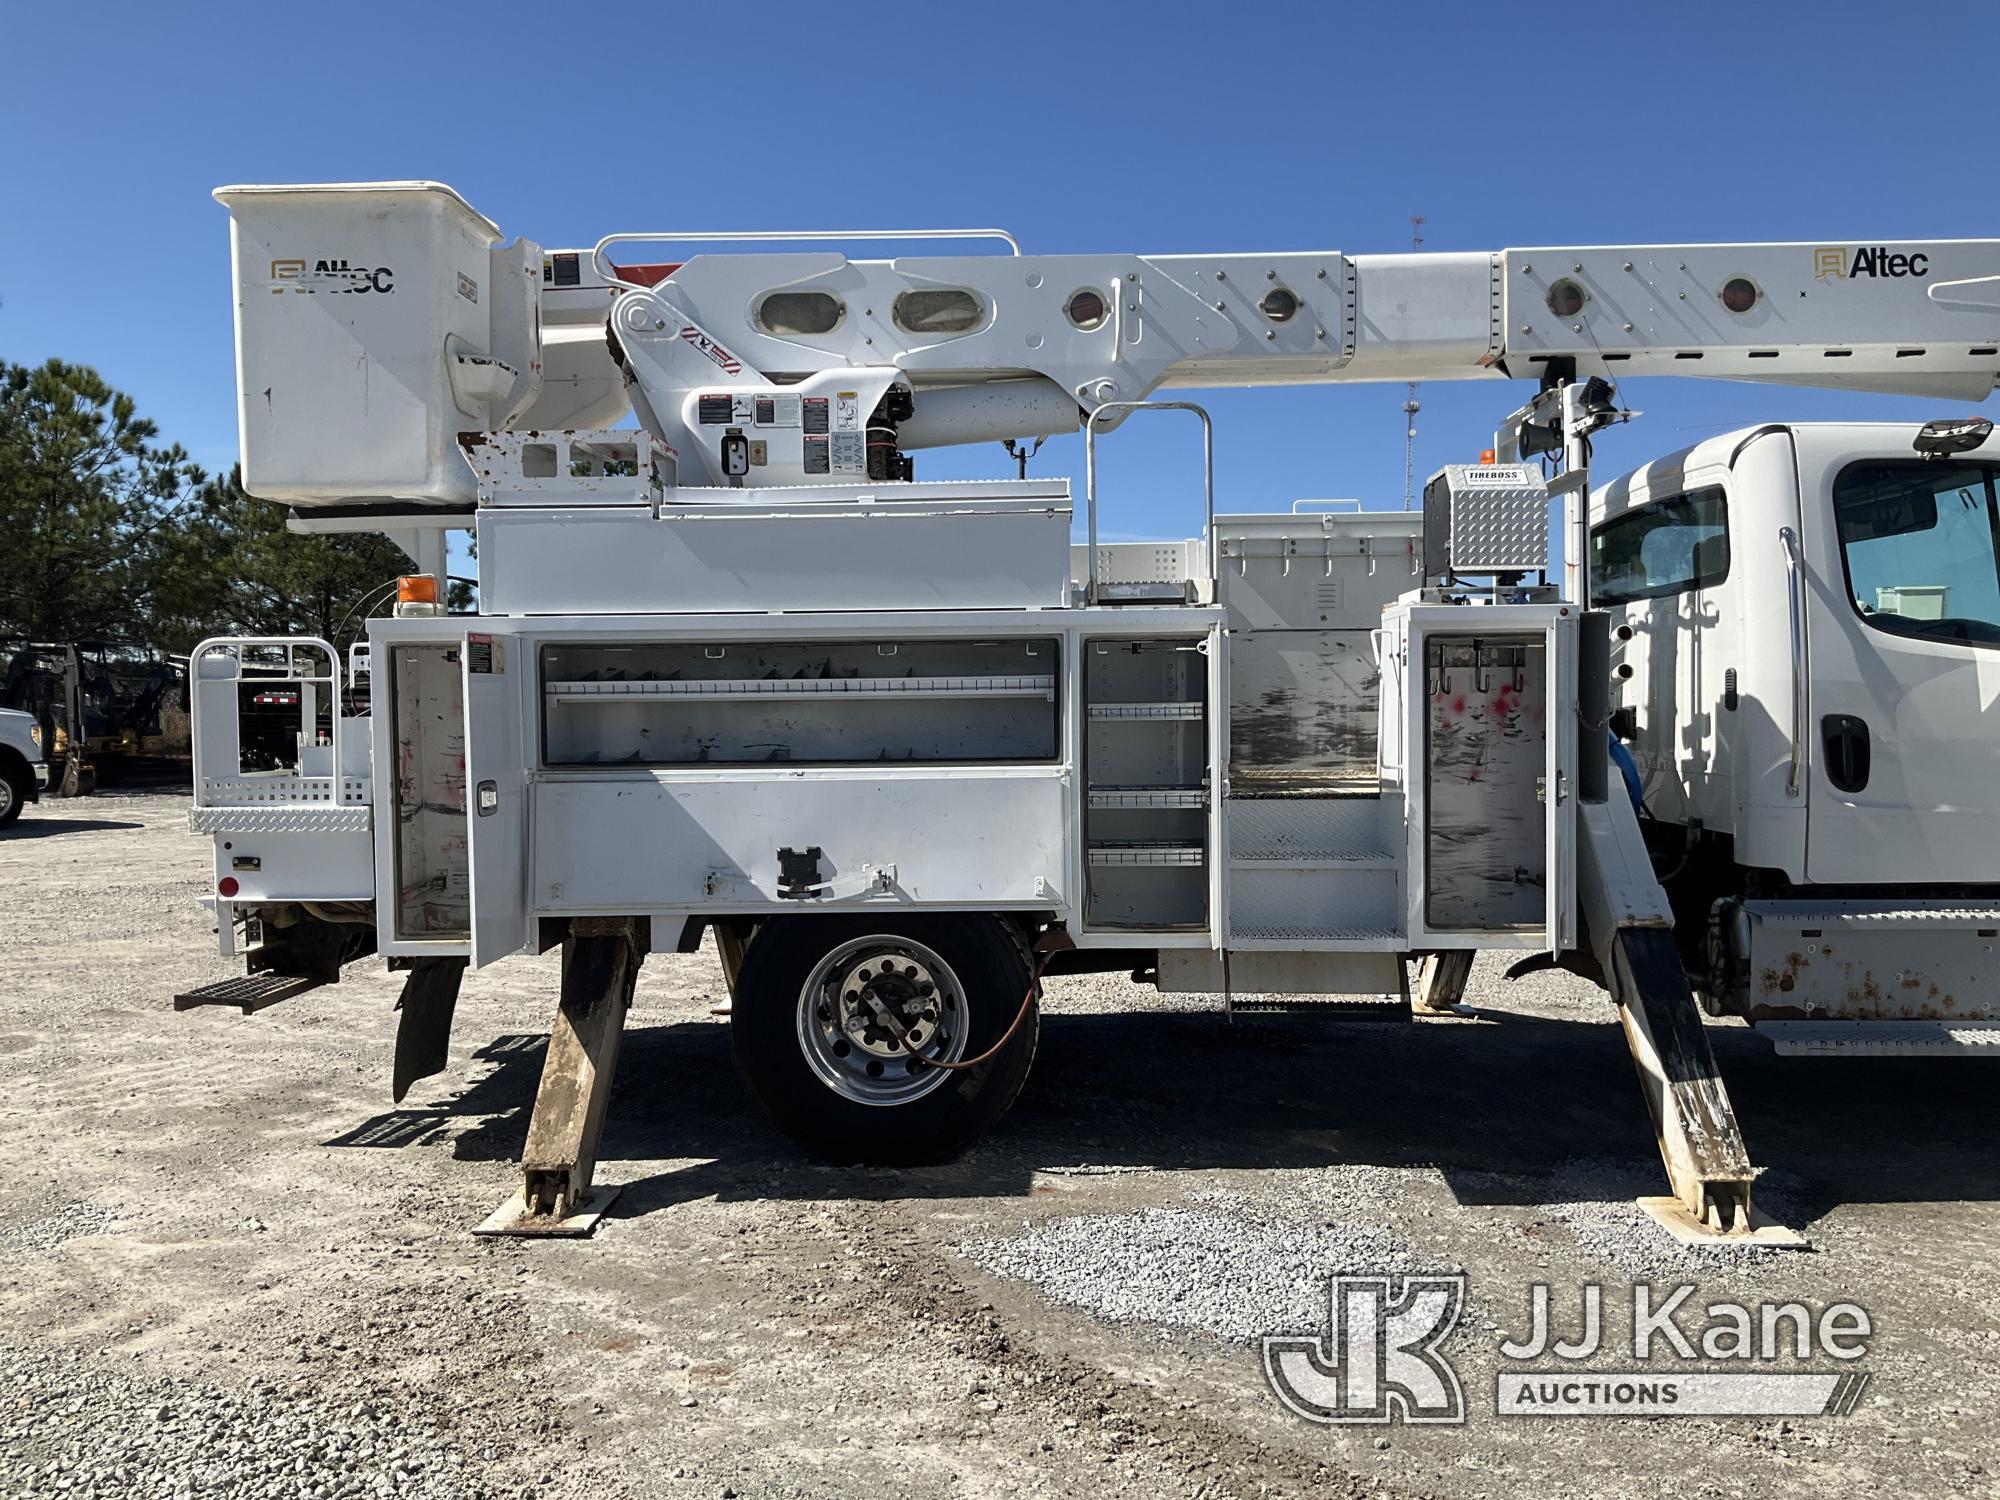 (Villa Rica, GA) Altec AM55-MH, Over-Center Material Handling Bucket Truck rear mounted on 2017 Frei